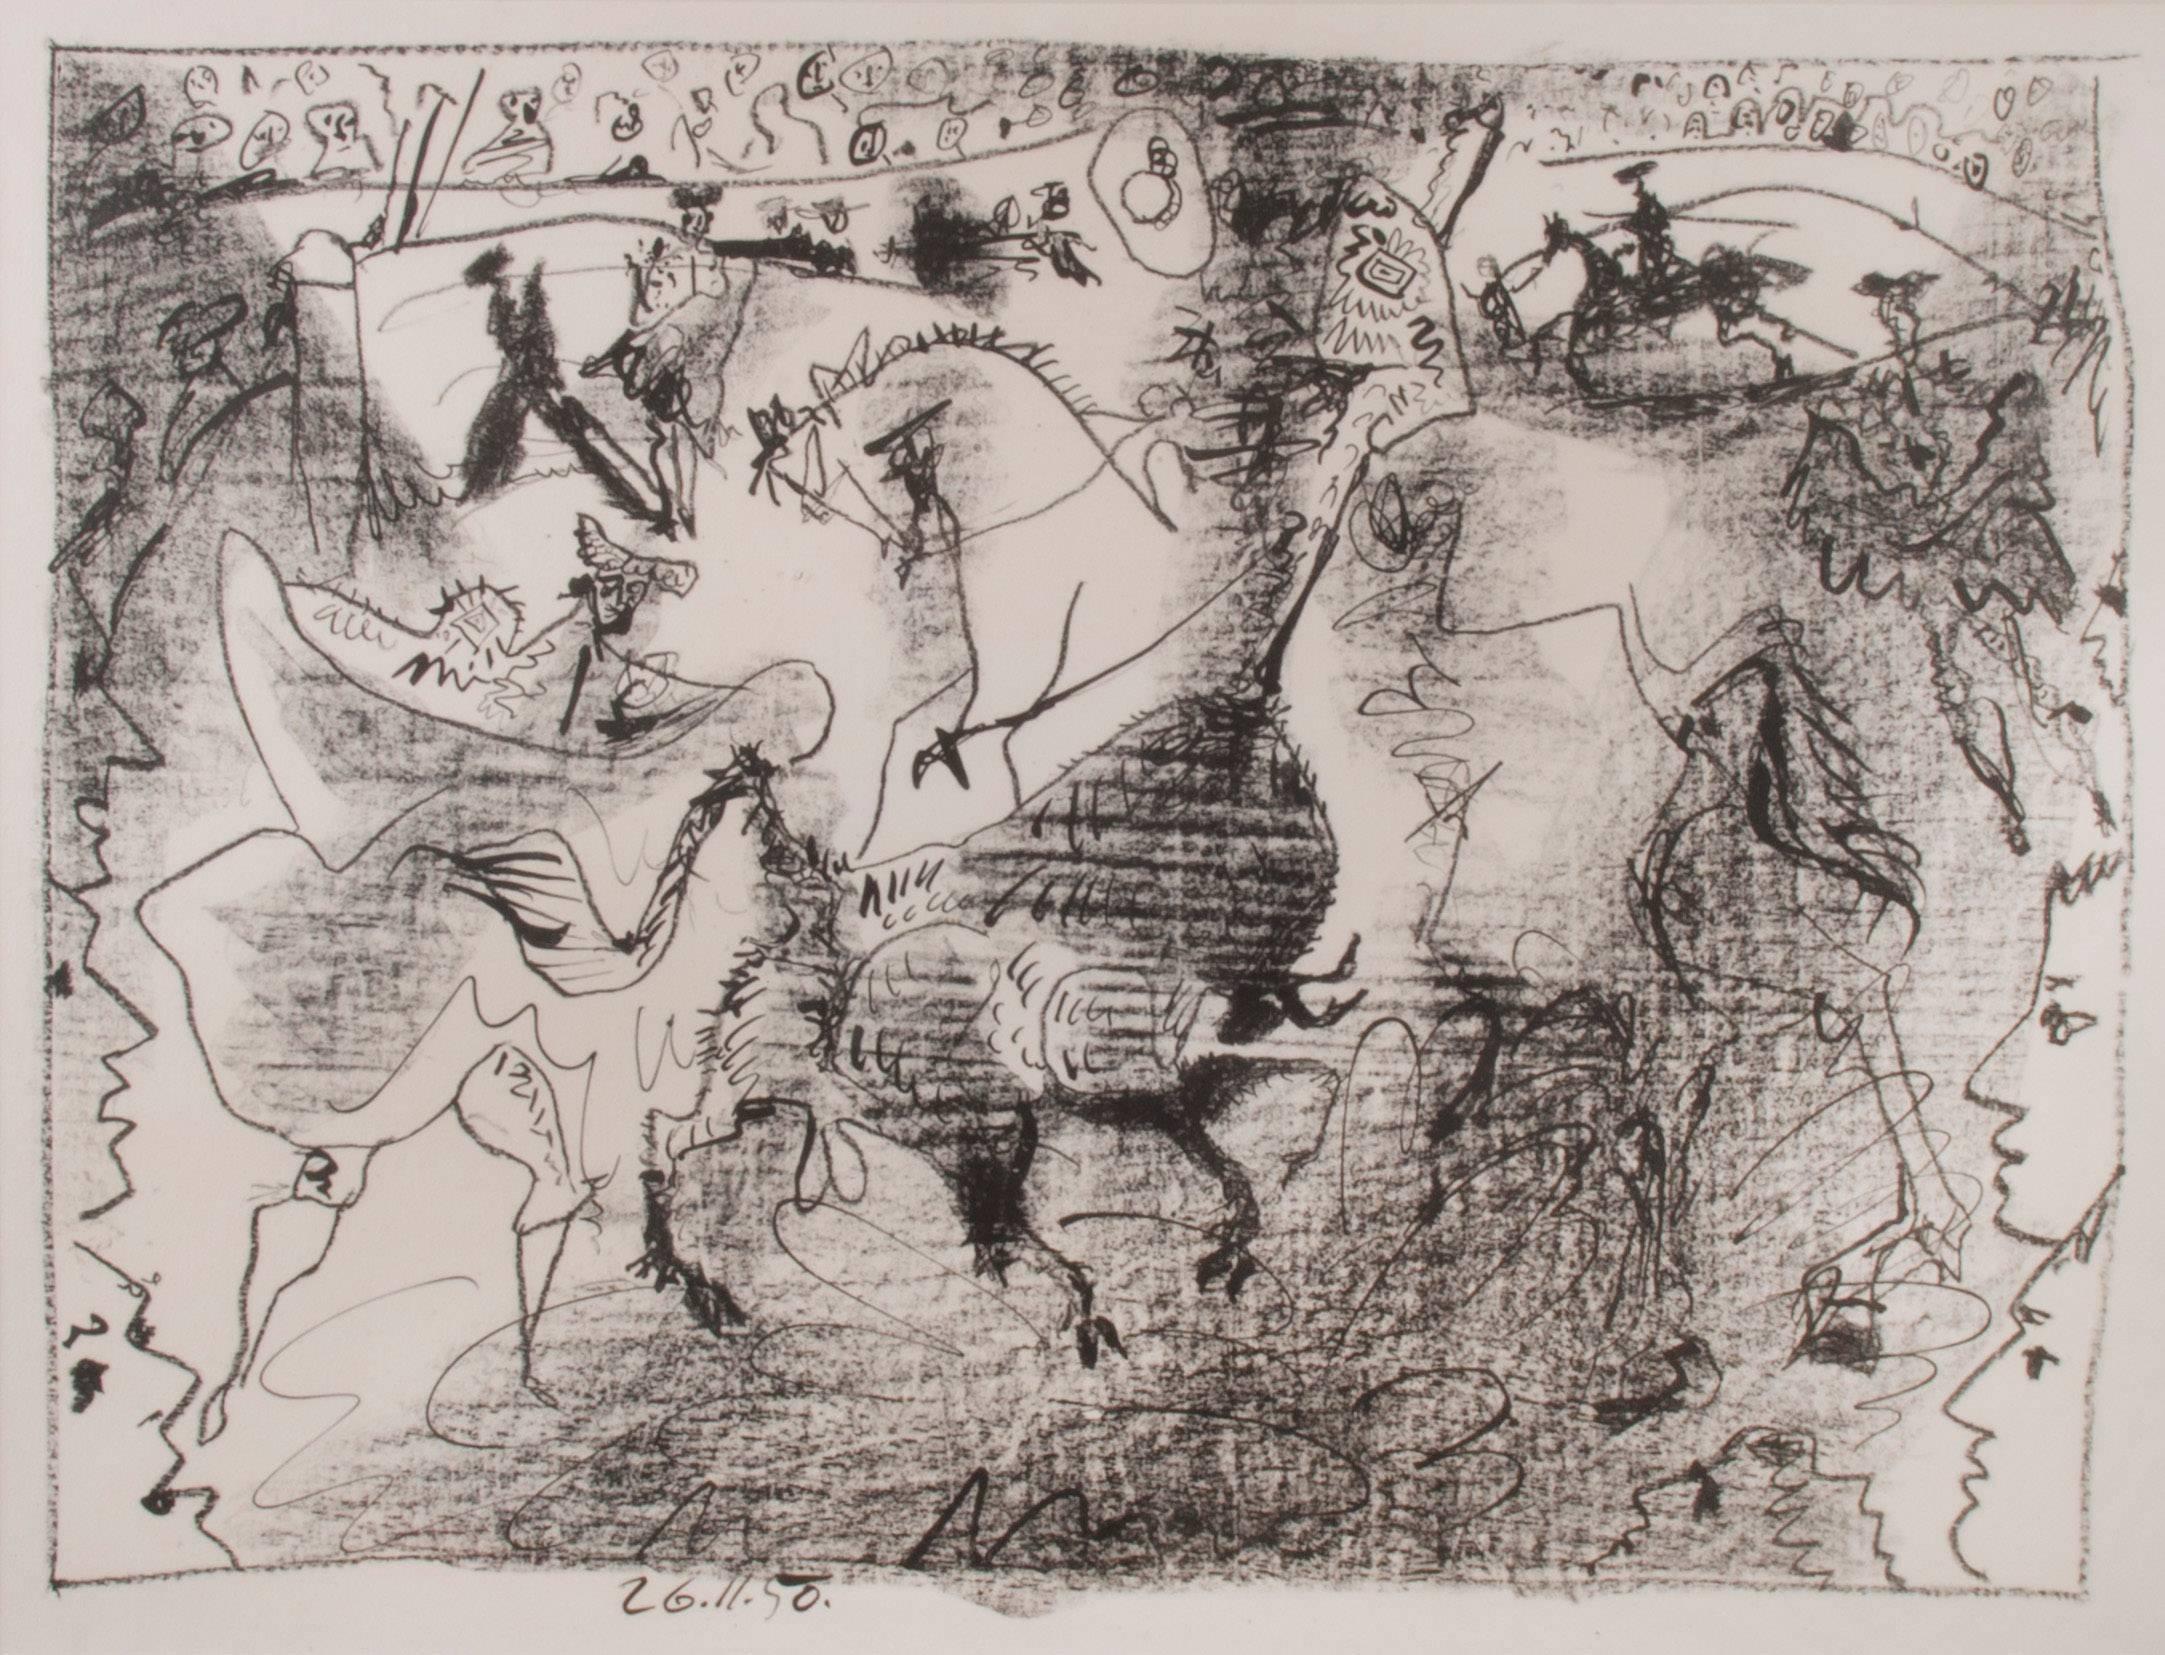 Pablo Picasso Abstract Print – La Pique (Der Pike)